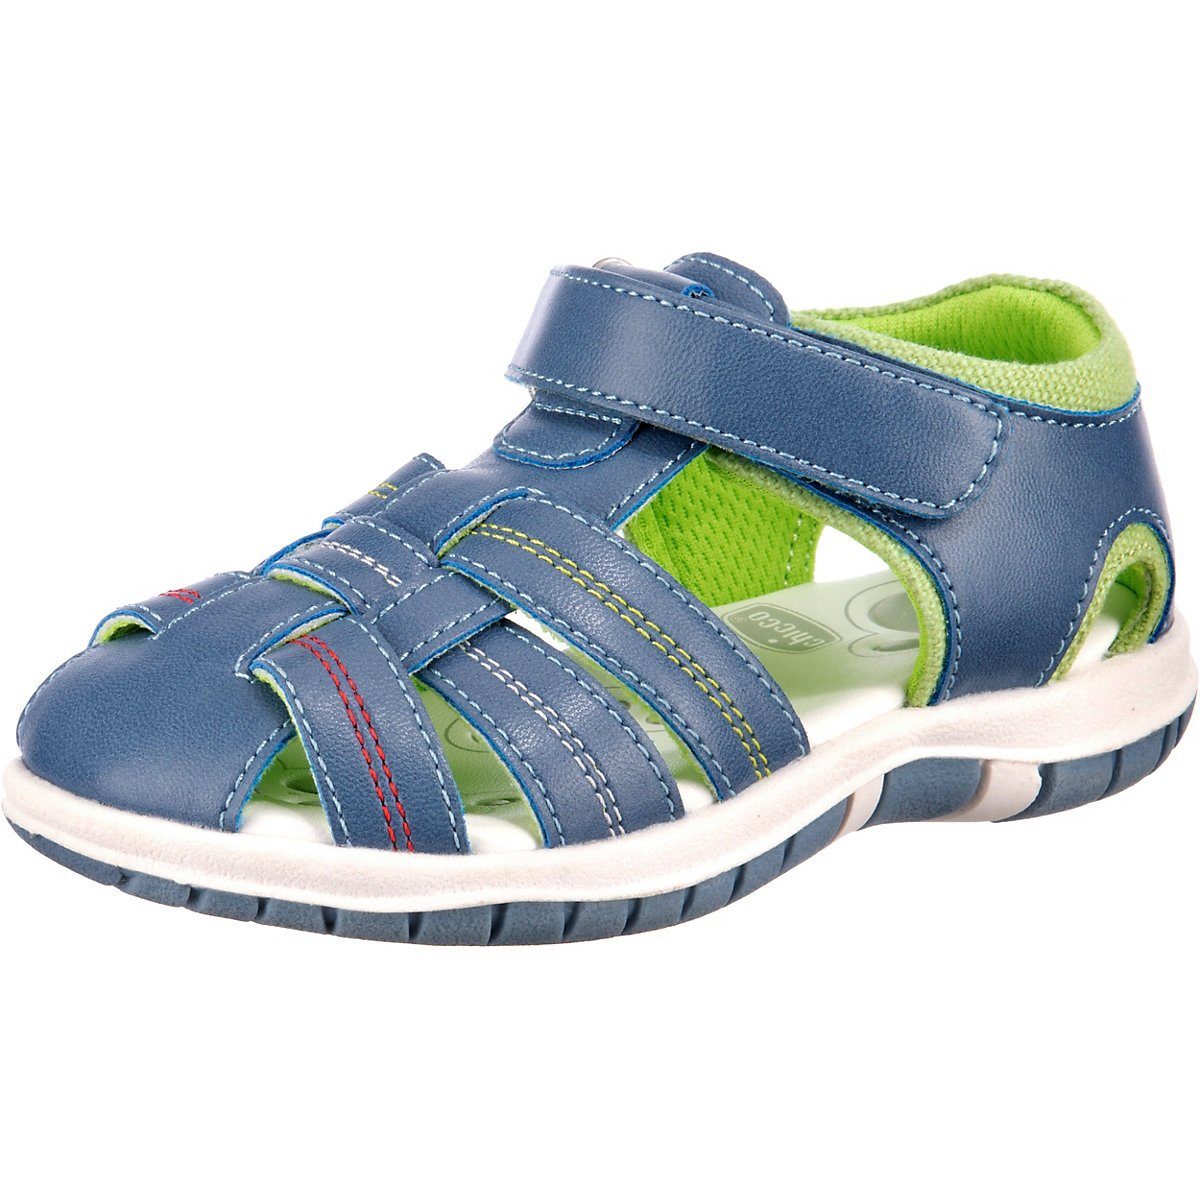 Schuhe Babyschuhe Jungen Chicco Baby Sandalen FAUSTO für Jungen Sandale